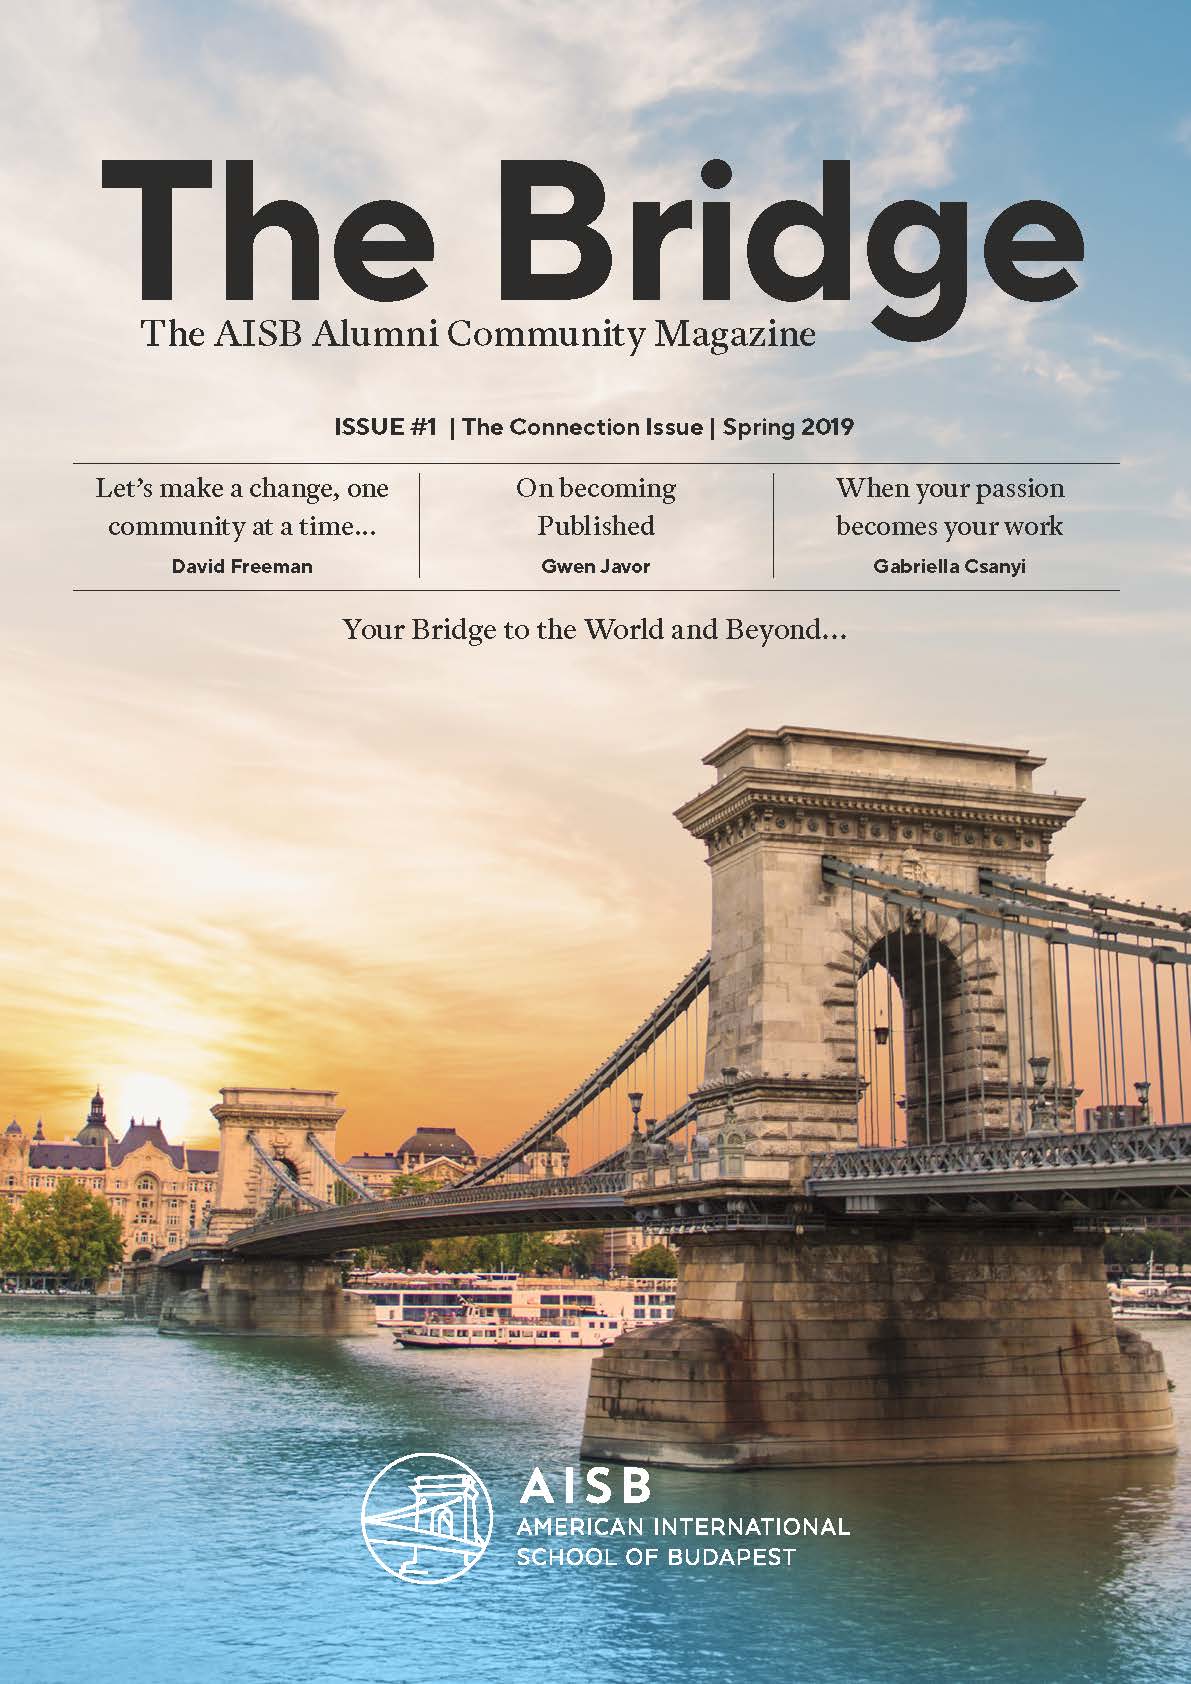 American International School Budapest’s Alumni Magazine ‘The Bridge’ Released